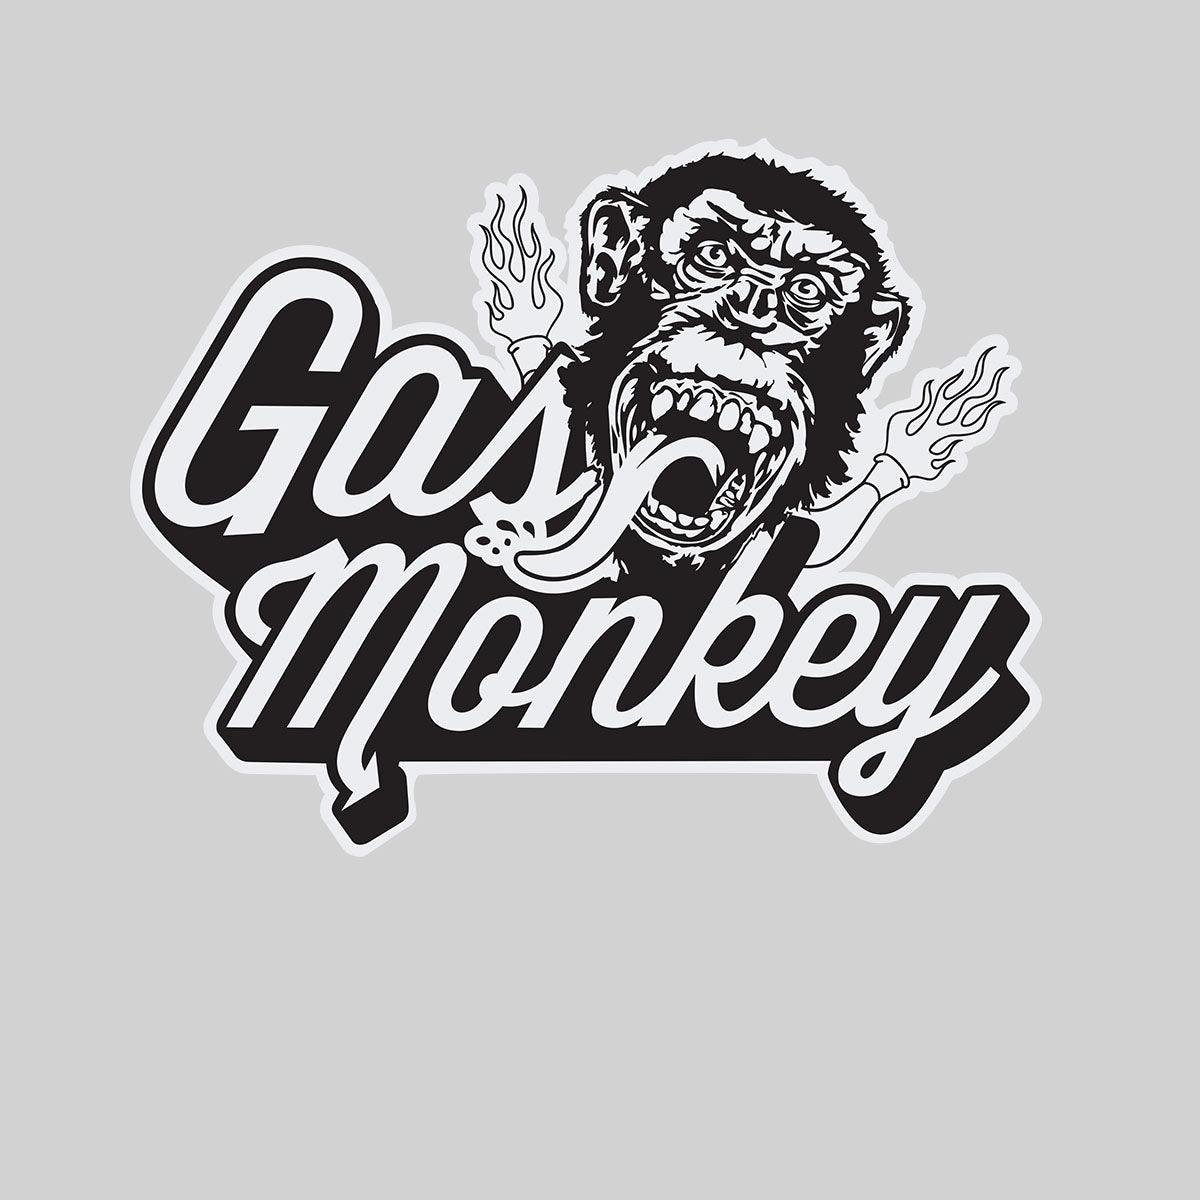 Gas Monkey Garage Spark Plugs Blood Sweat Beers Licensed Typography Unisex T-Shirt - Kuzi Tees